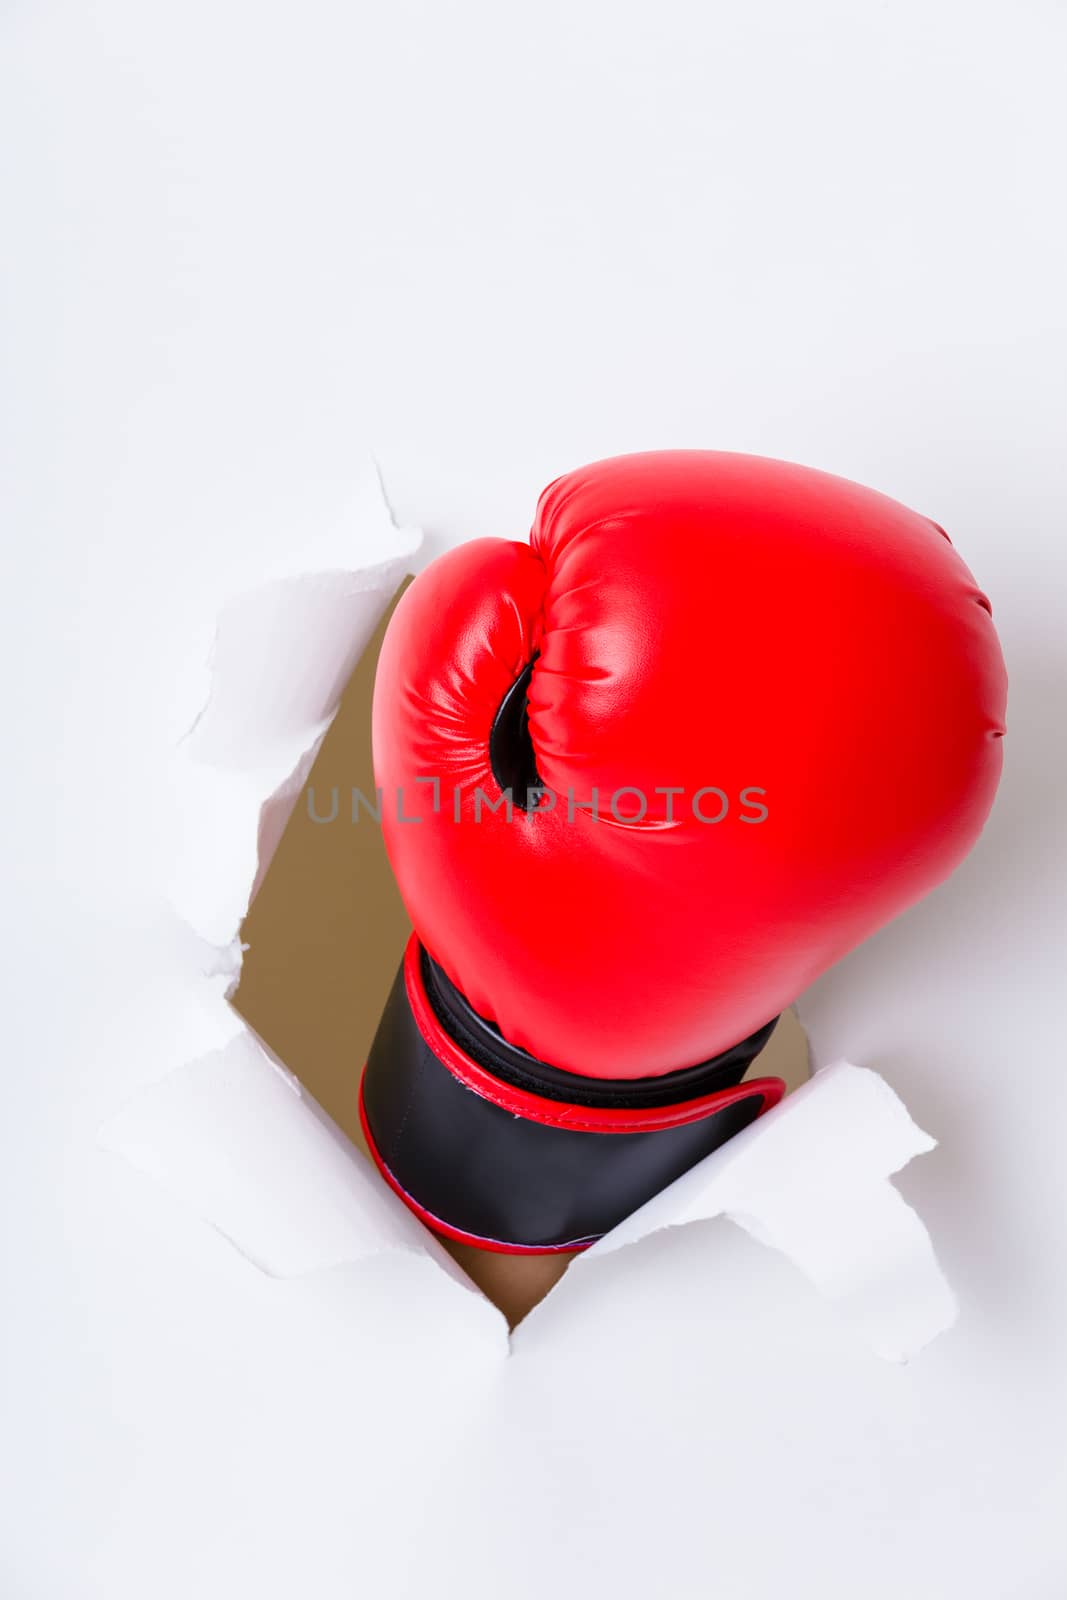 Boxer glove breaking paper